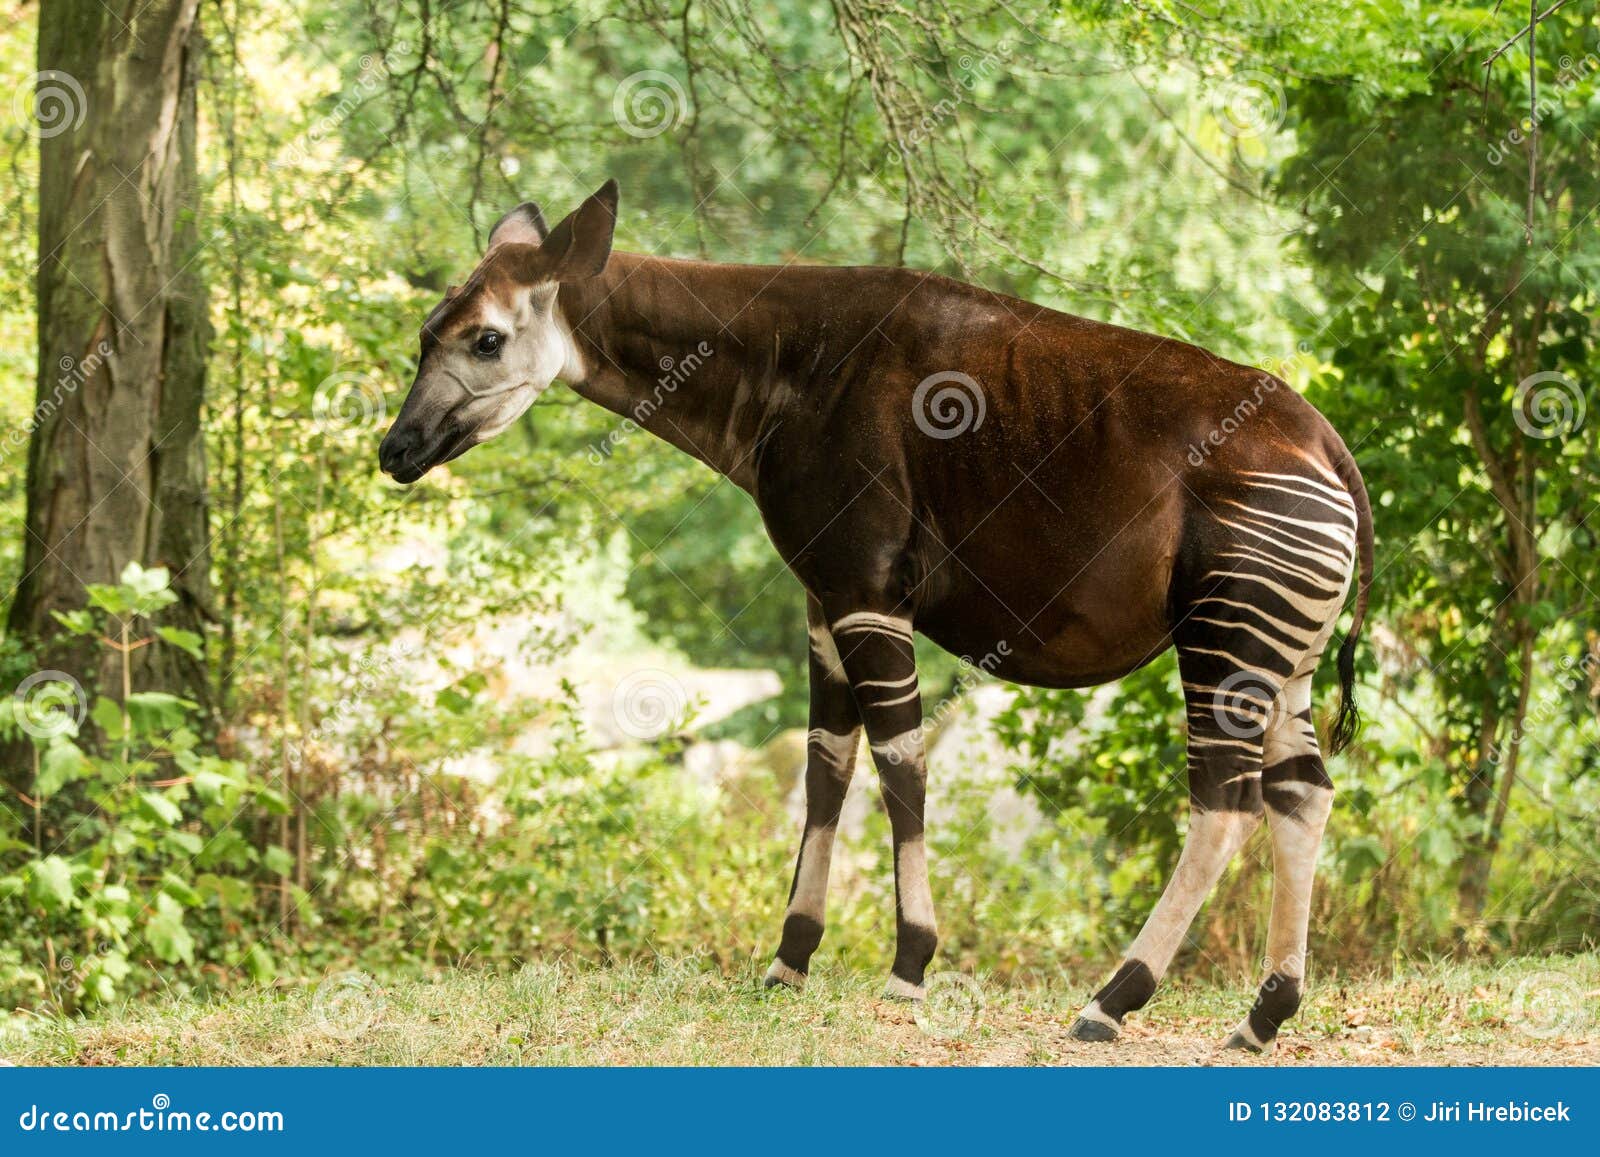 okapi okapia johnstoni, forest giraffe or zebra giraffe, artiodactyl mammal native to jungle or tropical forest, congo, africa